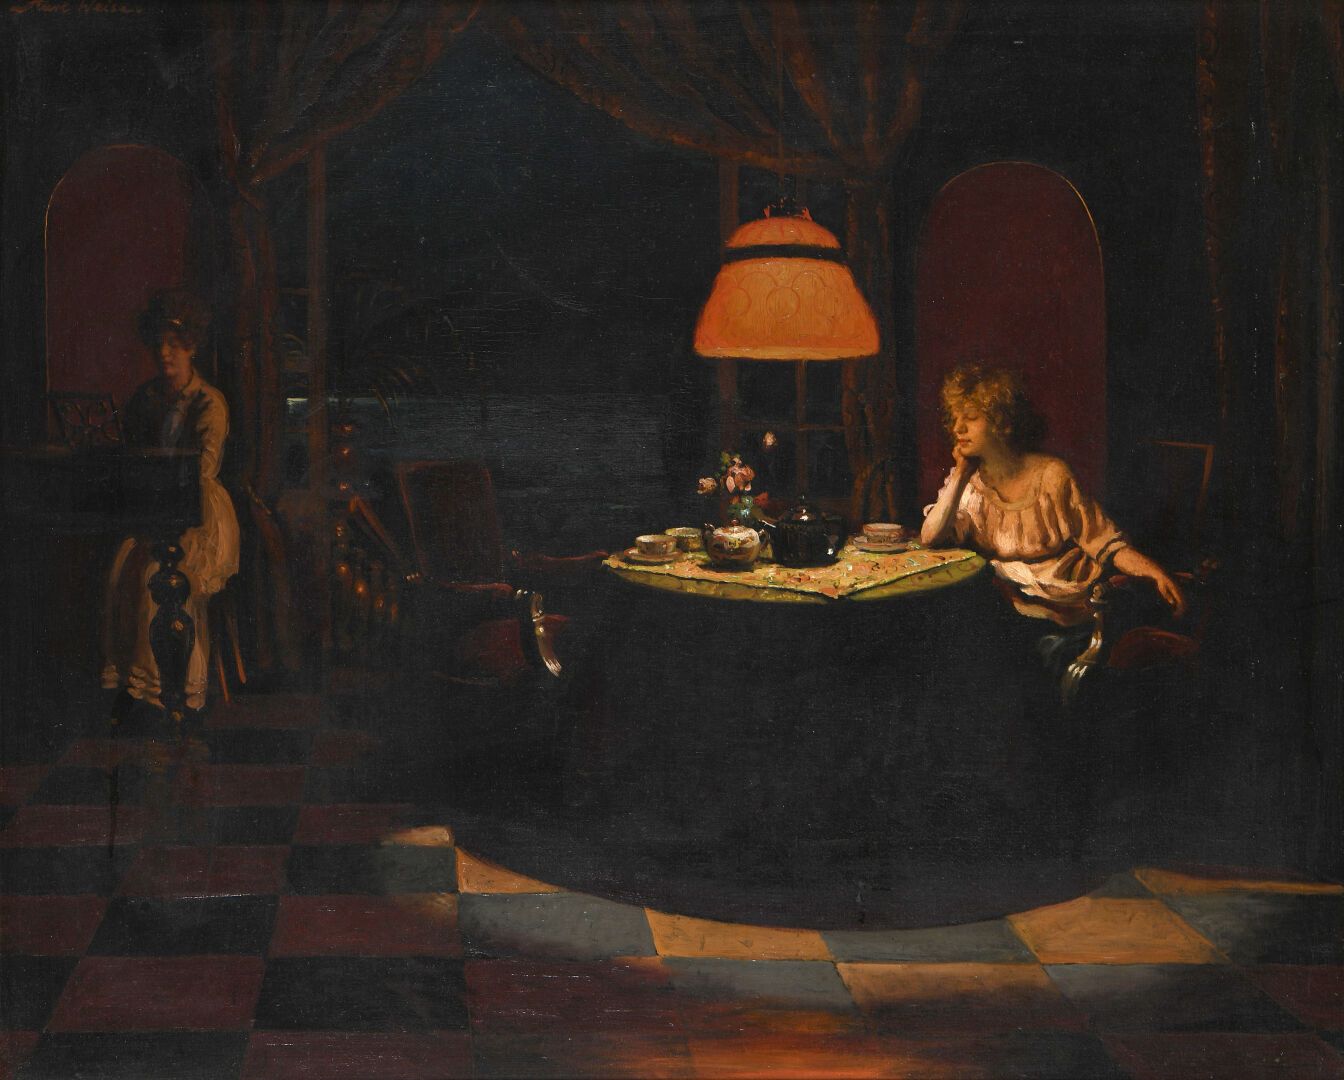 Null 卡尔-魏斯 (1890-1947)
室内的女人
布面油画，左上角有签名。
74 x 91 cm